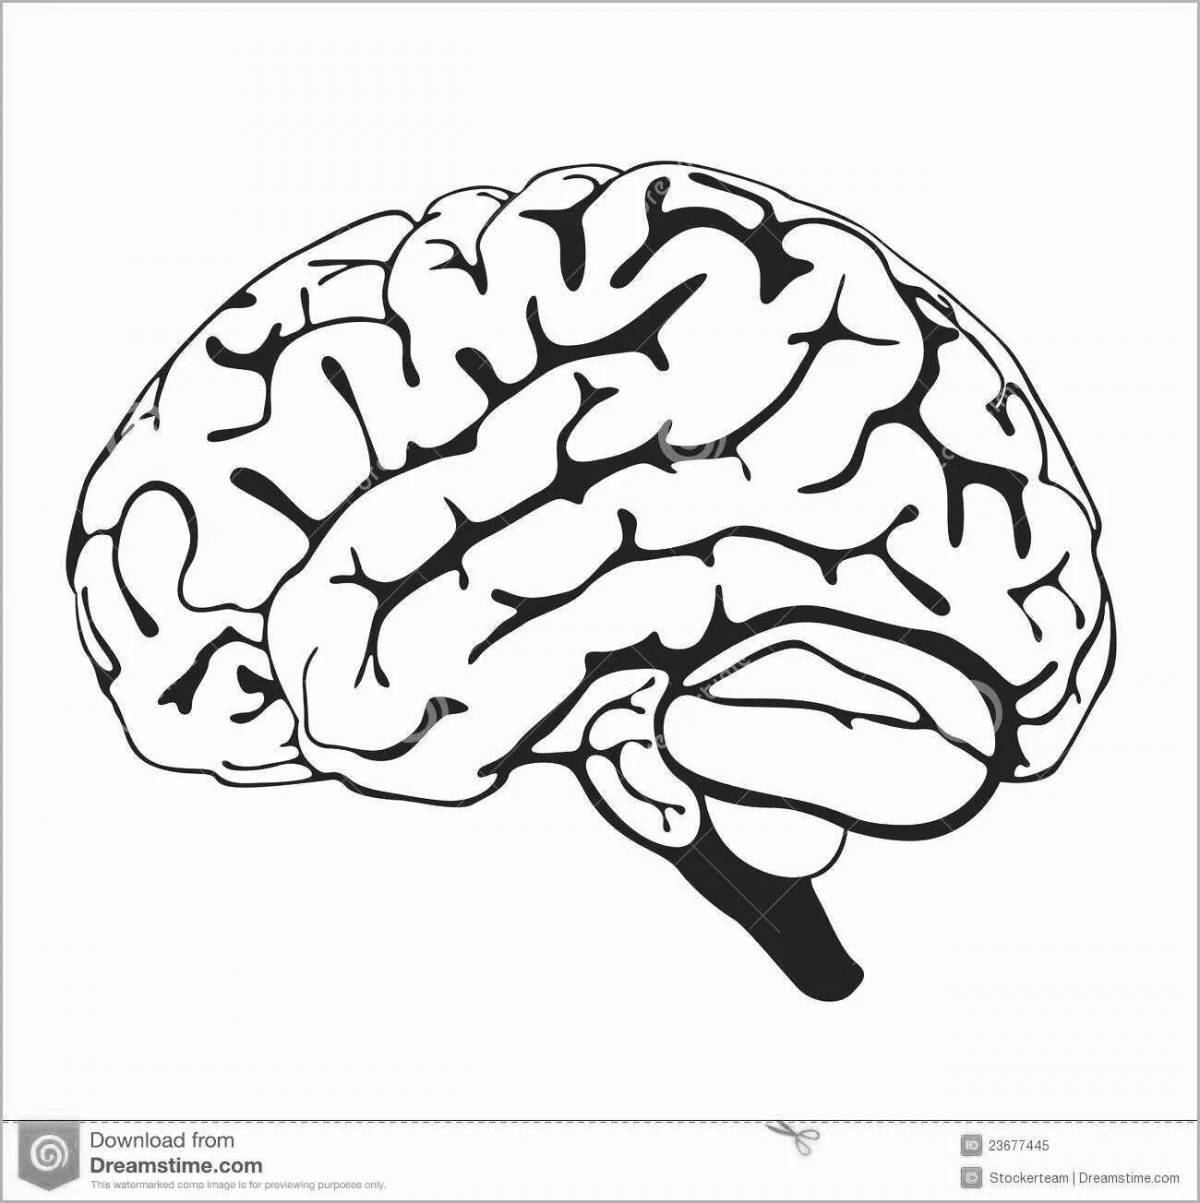 Human brain for children #13